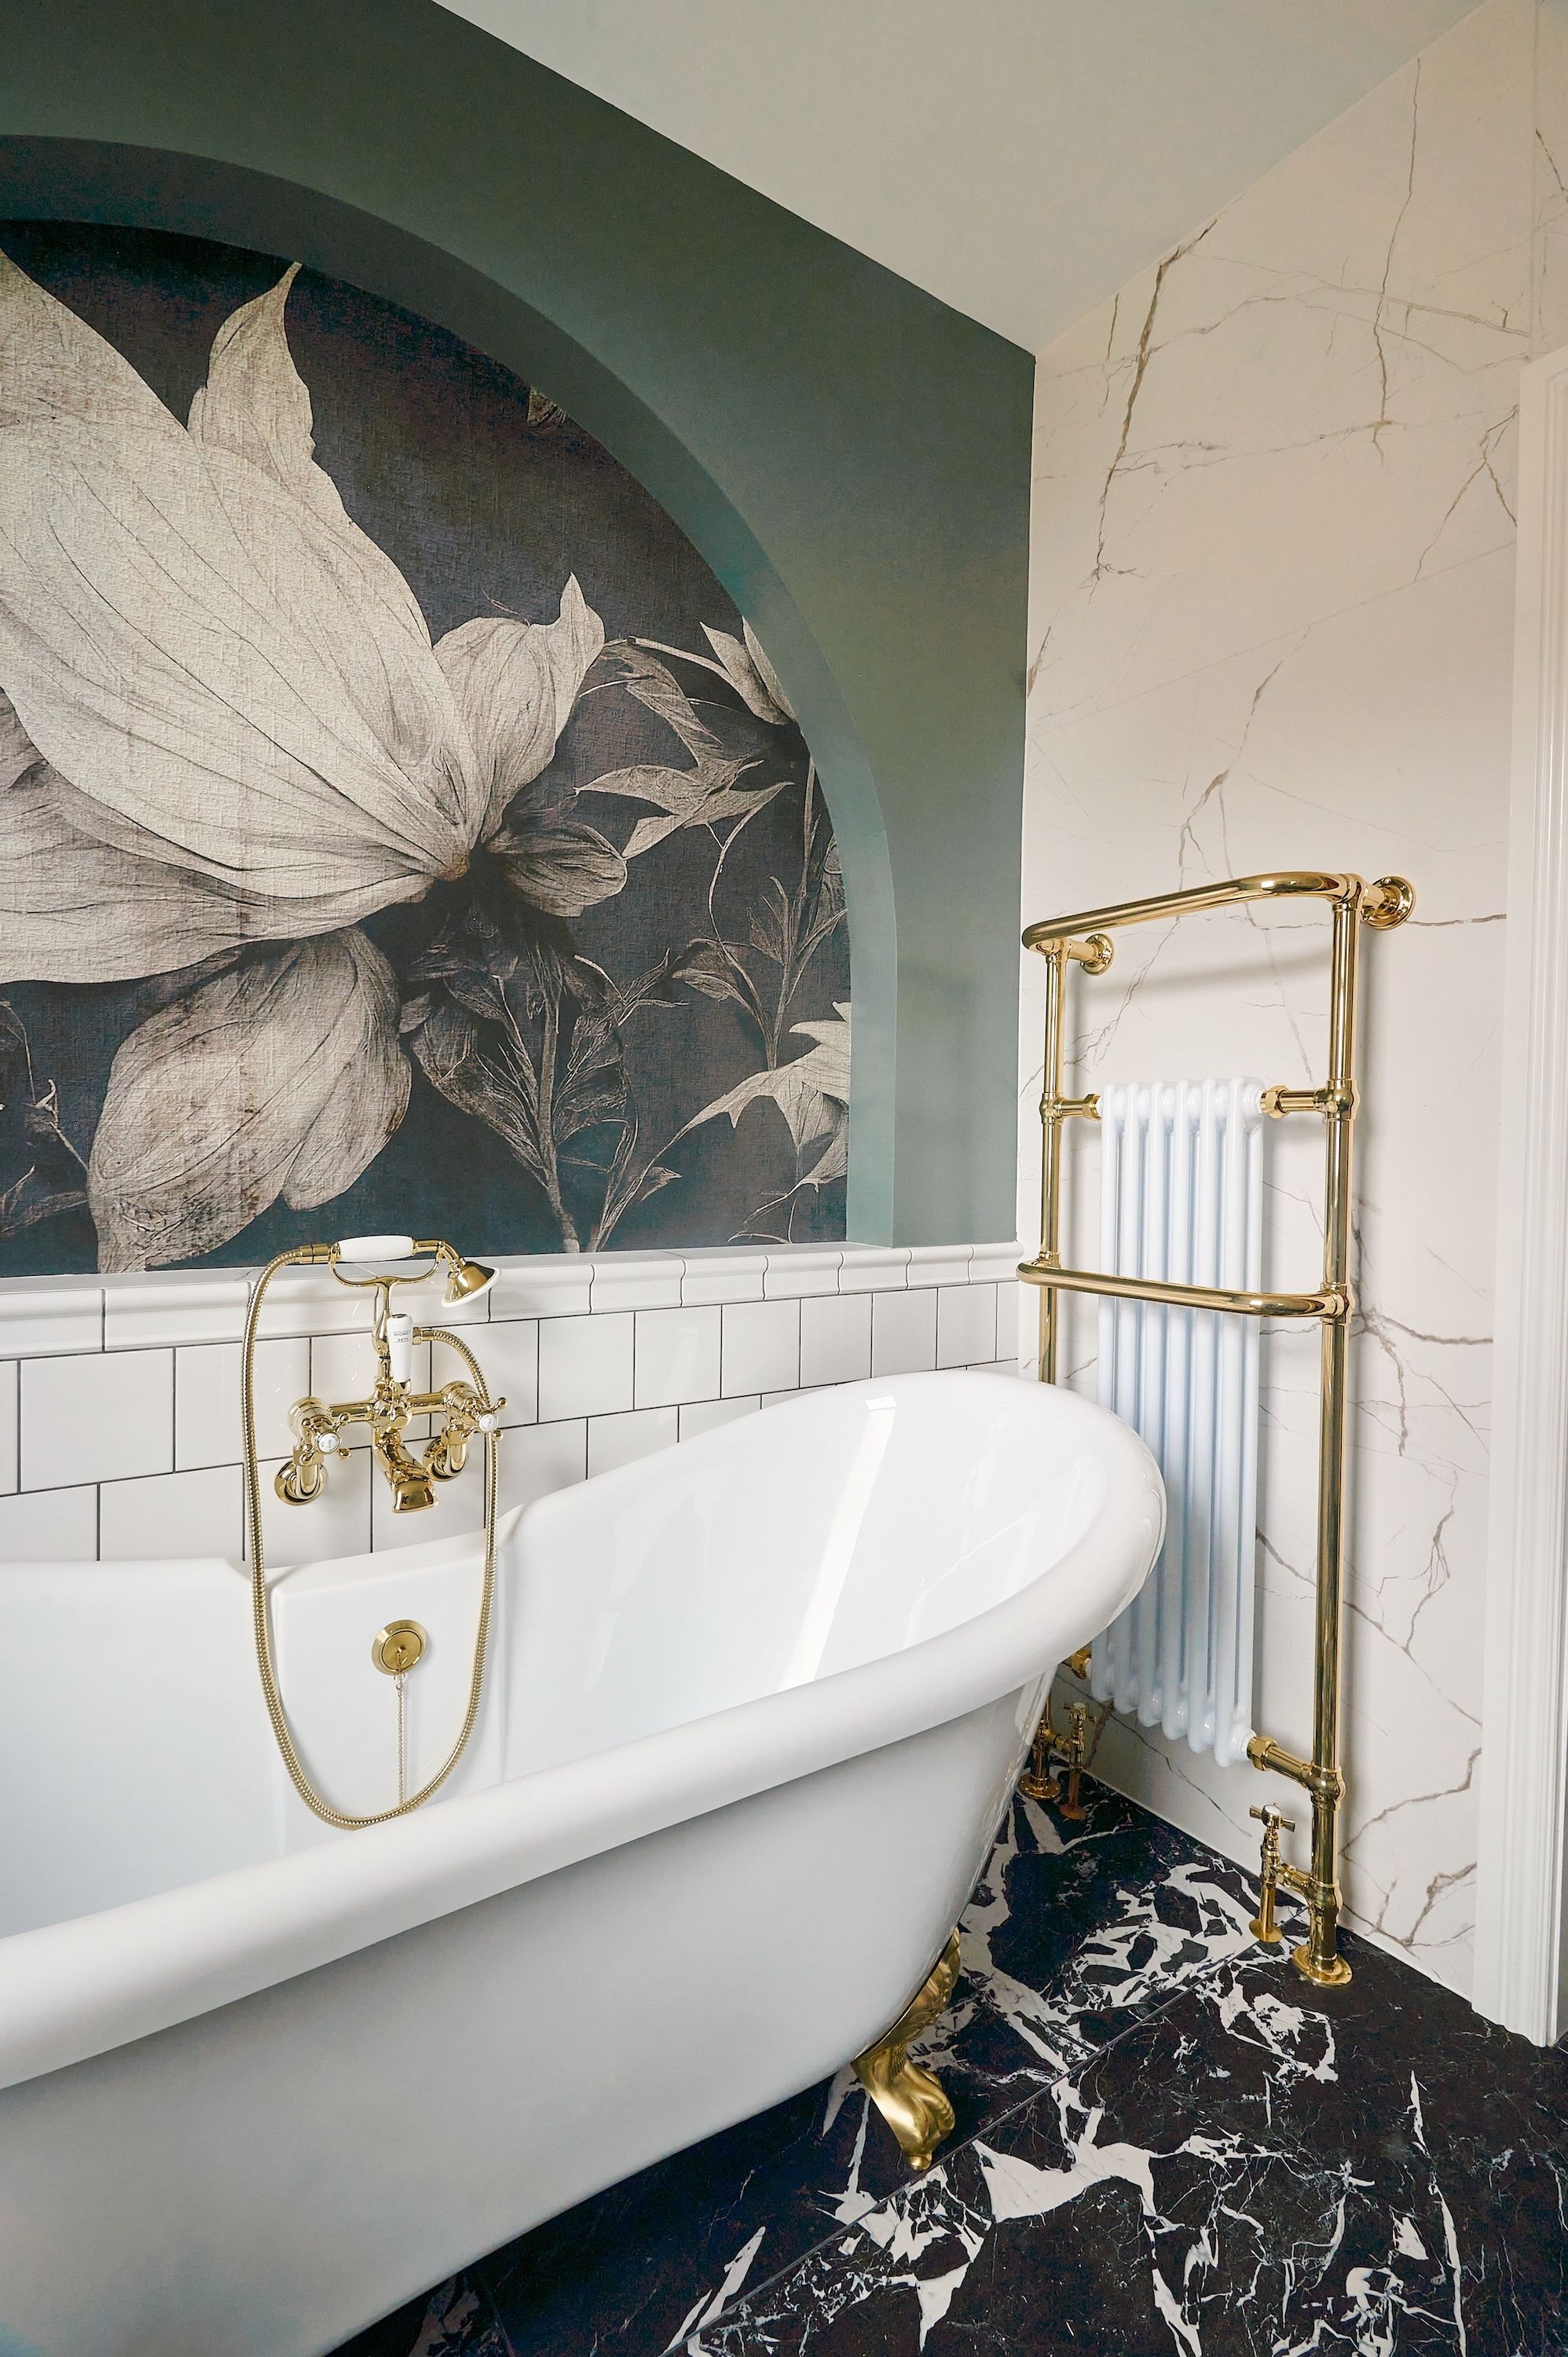 Marble bathroom flooring ideas – 10 ways to create a luxurious look with marble